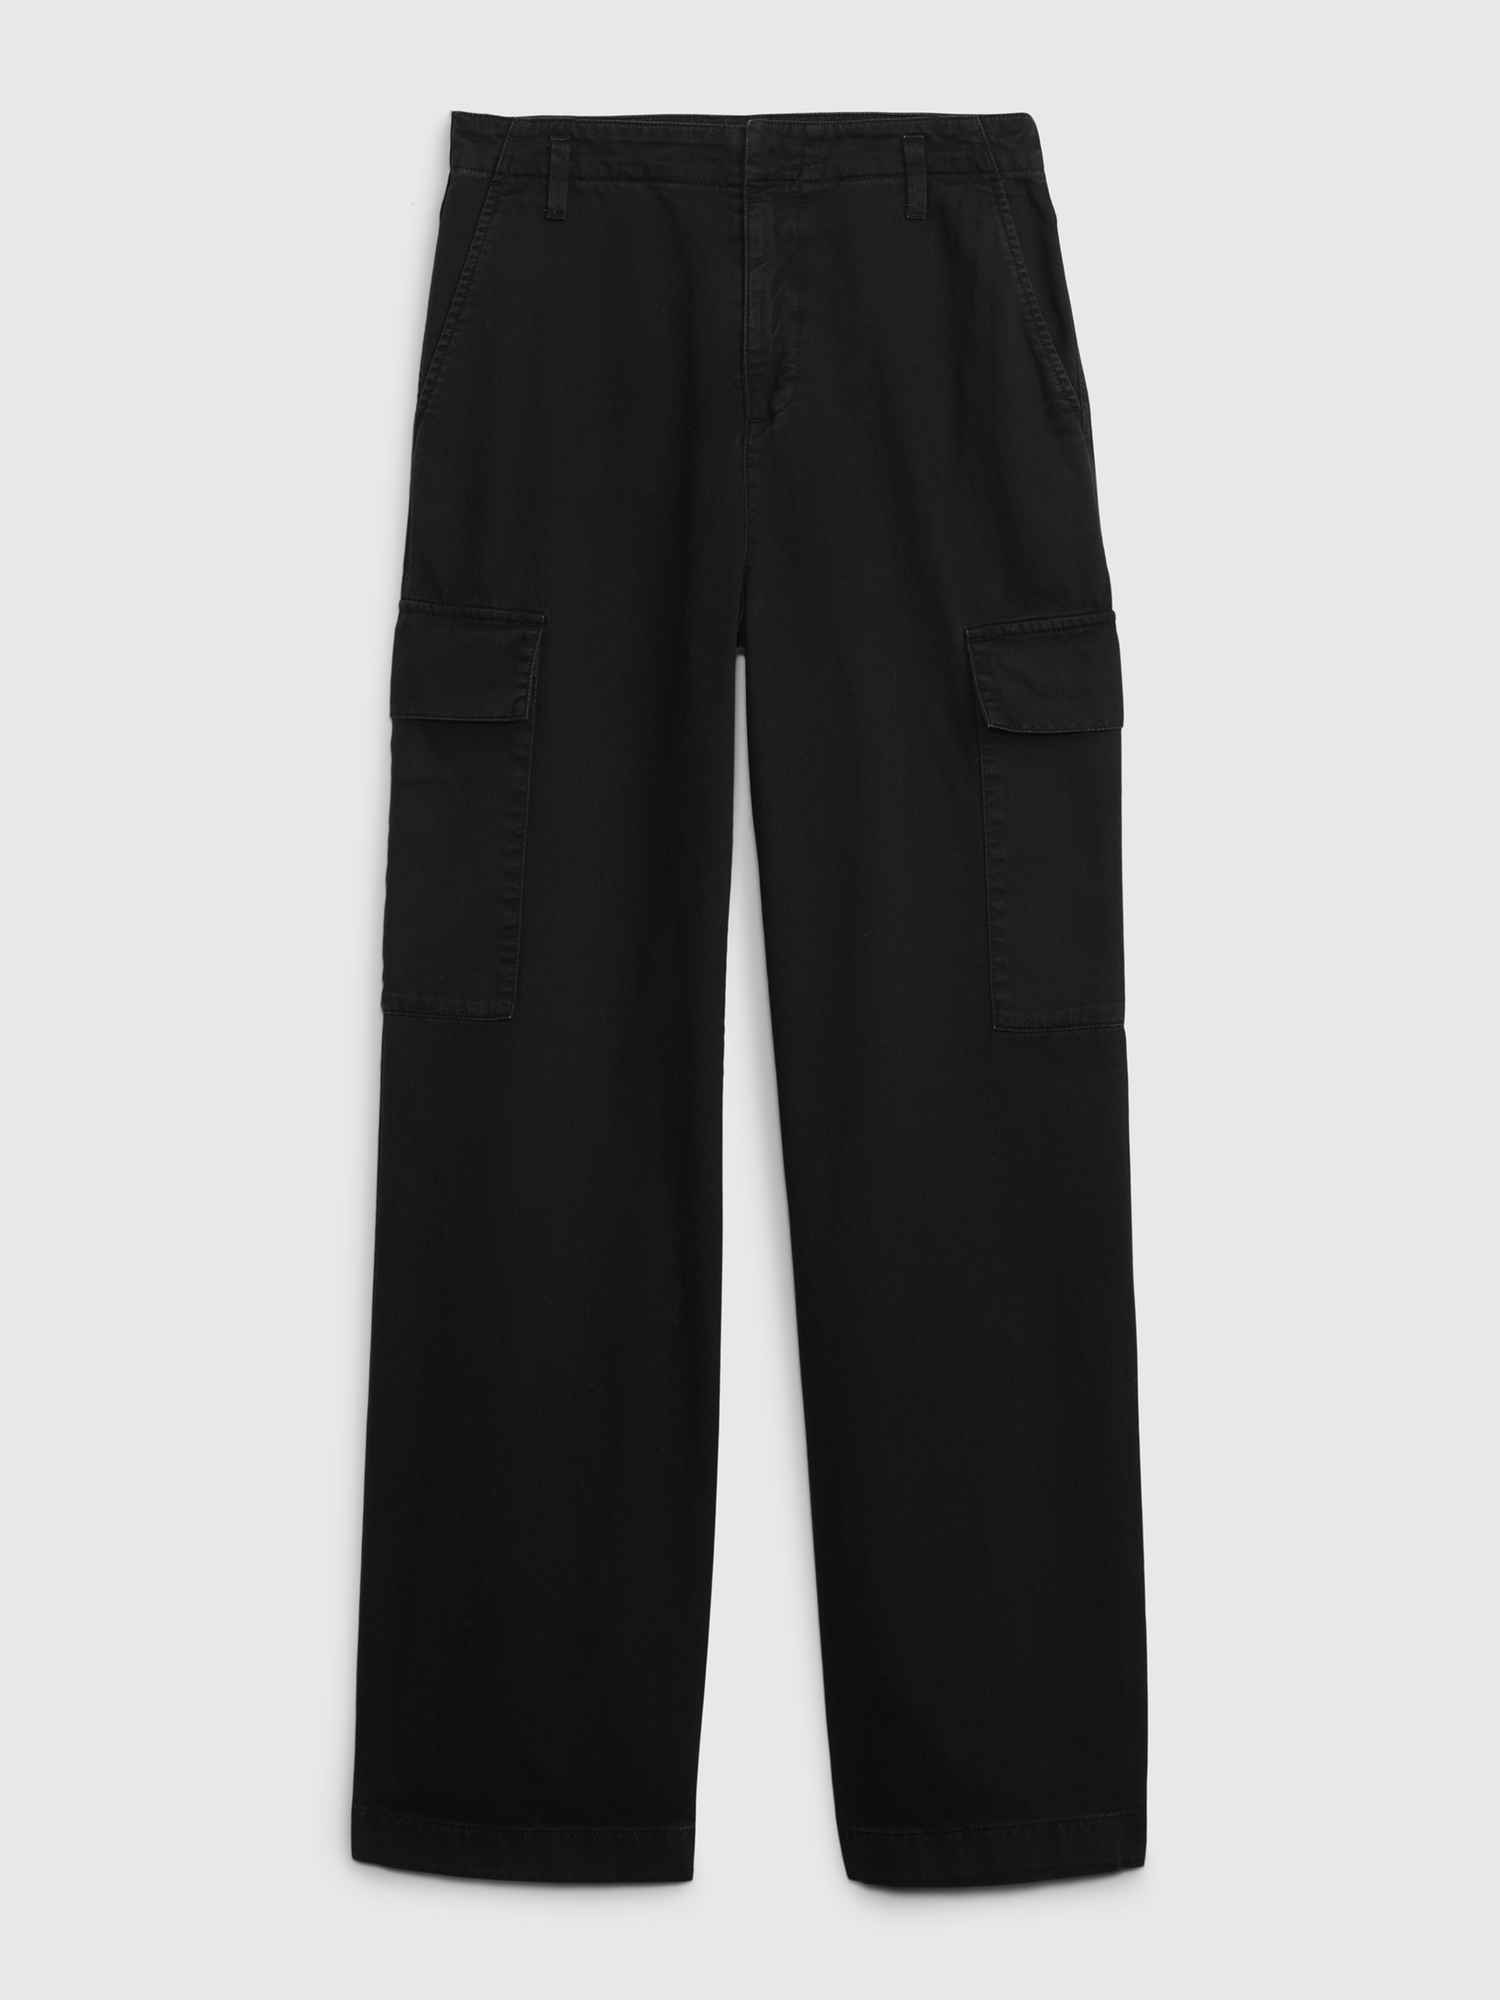 Loose Khaki Cargo Pants | Gap